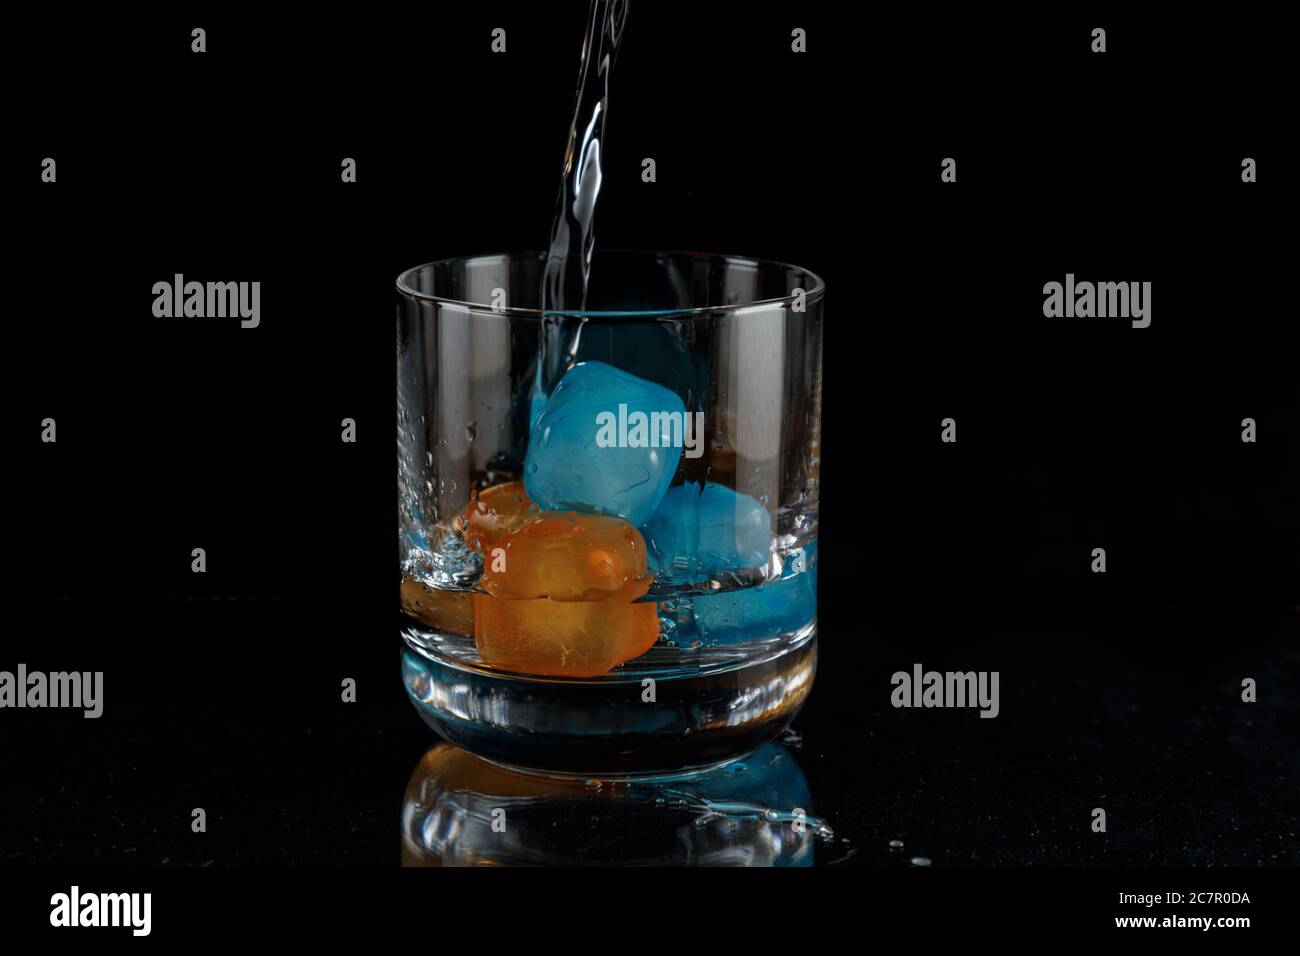 https://c8.alamy.com/comp/2C7R0DA/preparing-a-drink-while-pouring-over-the-ice-cubes-against-a-black-background-2C7R0DA.jpg